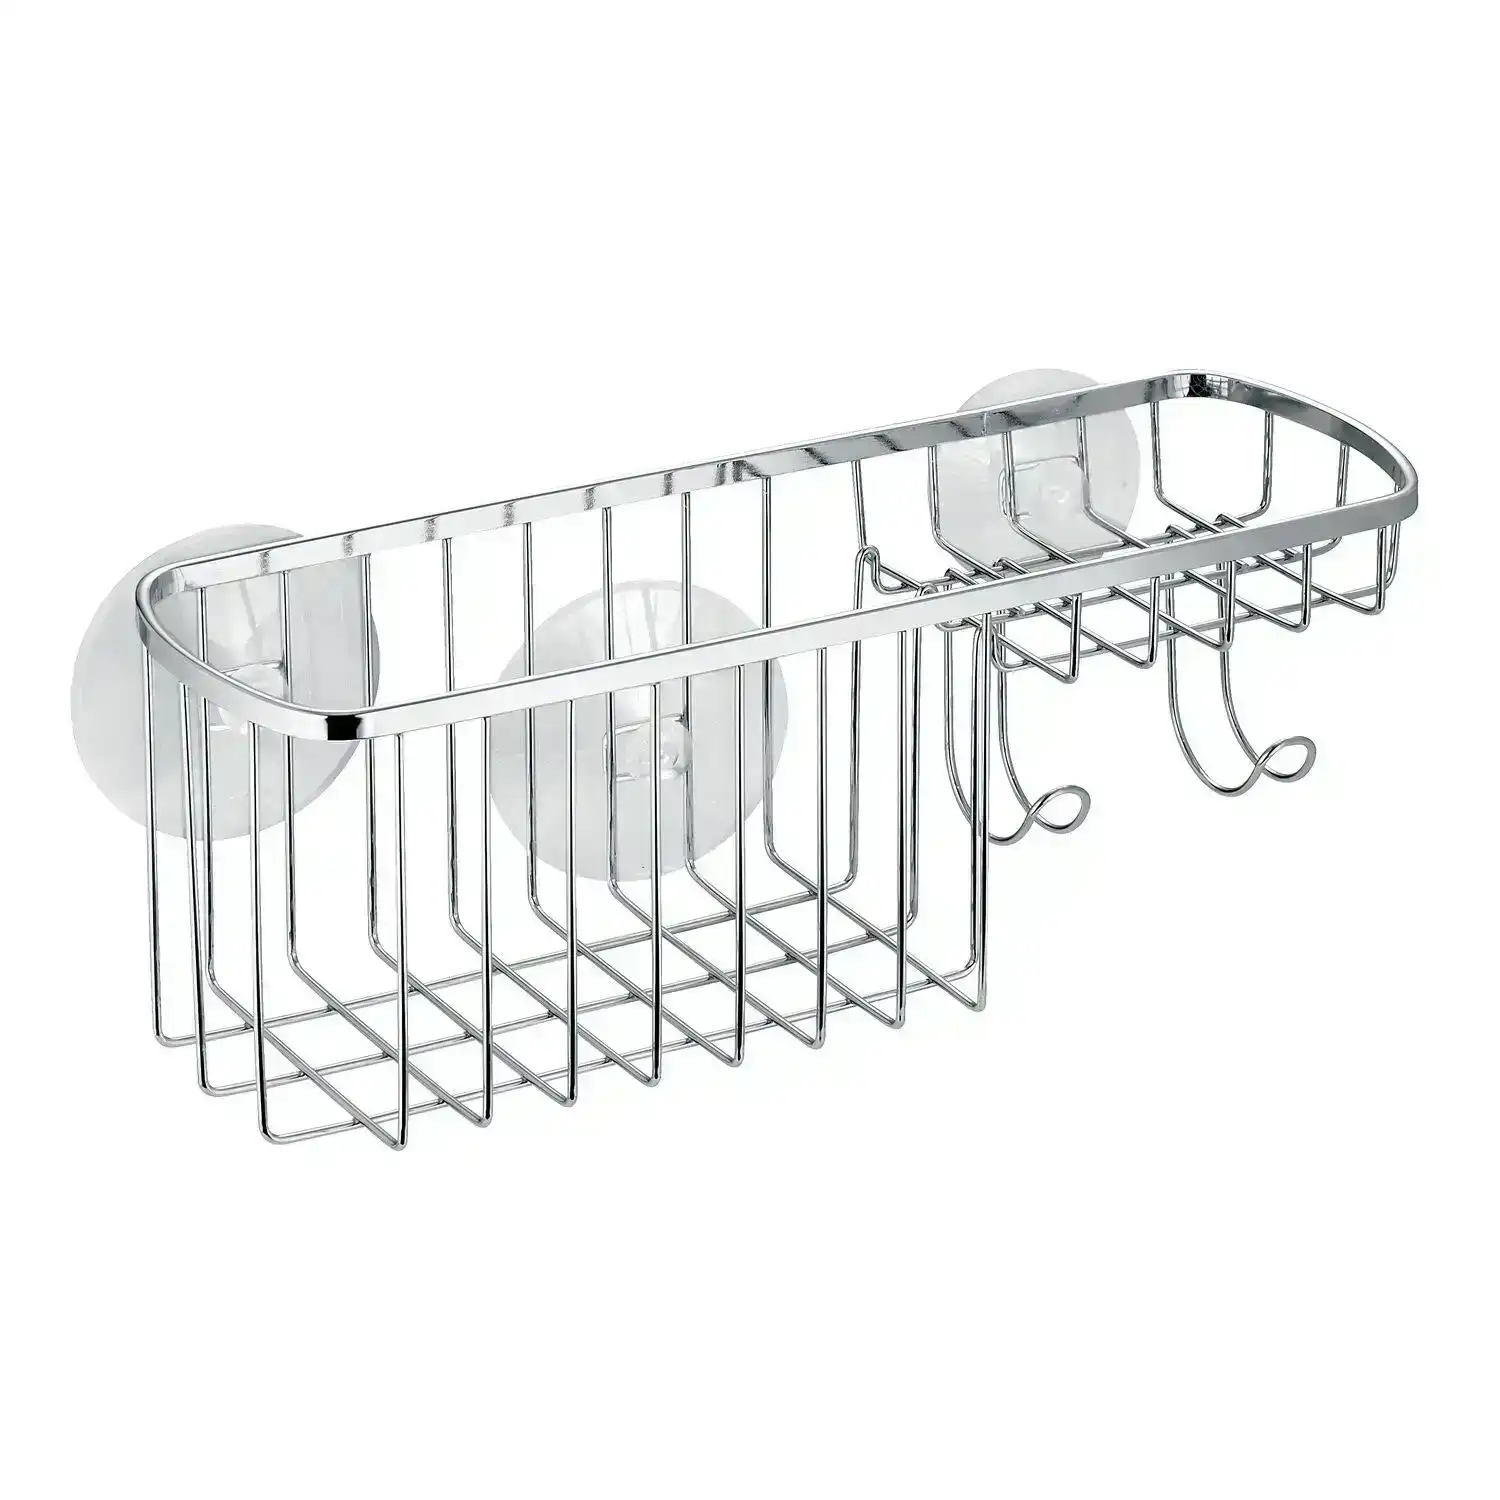 Idesign Gia 26.5cm Stainless Steel Combo Suction Basket Bathroom Wall Organiser